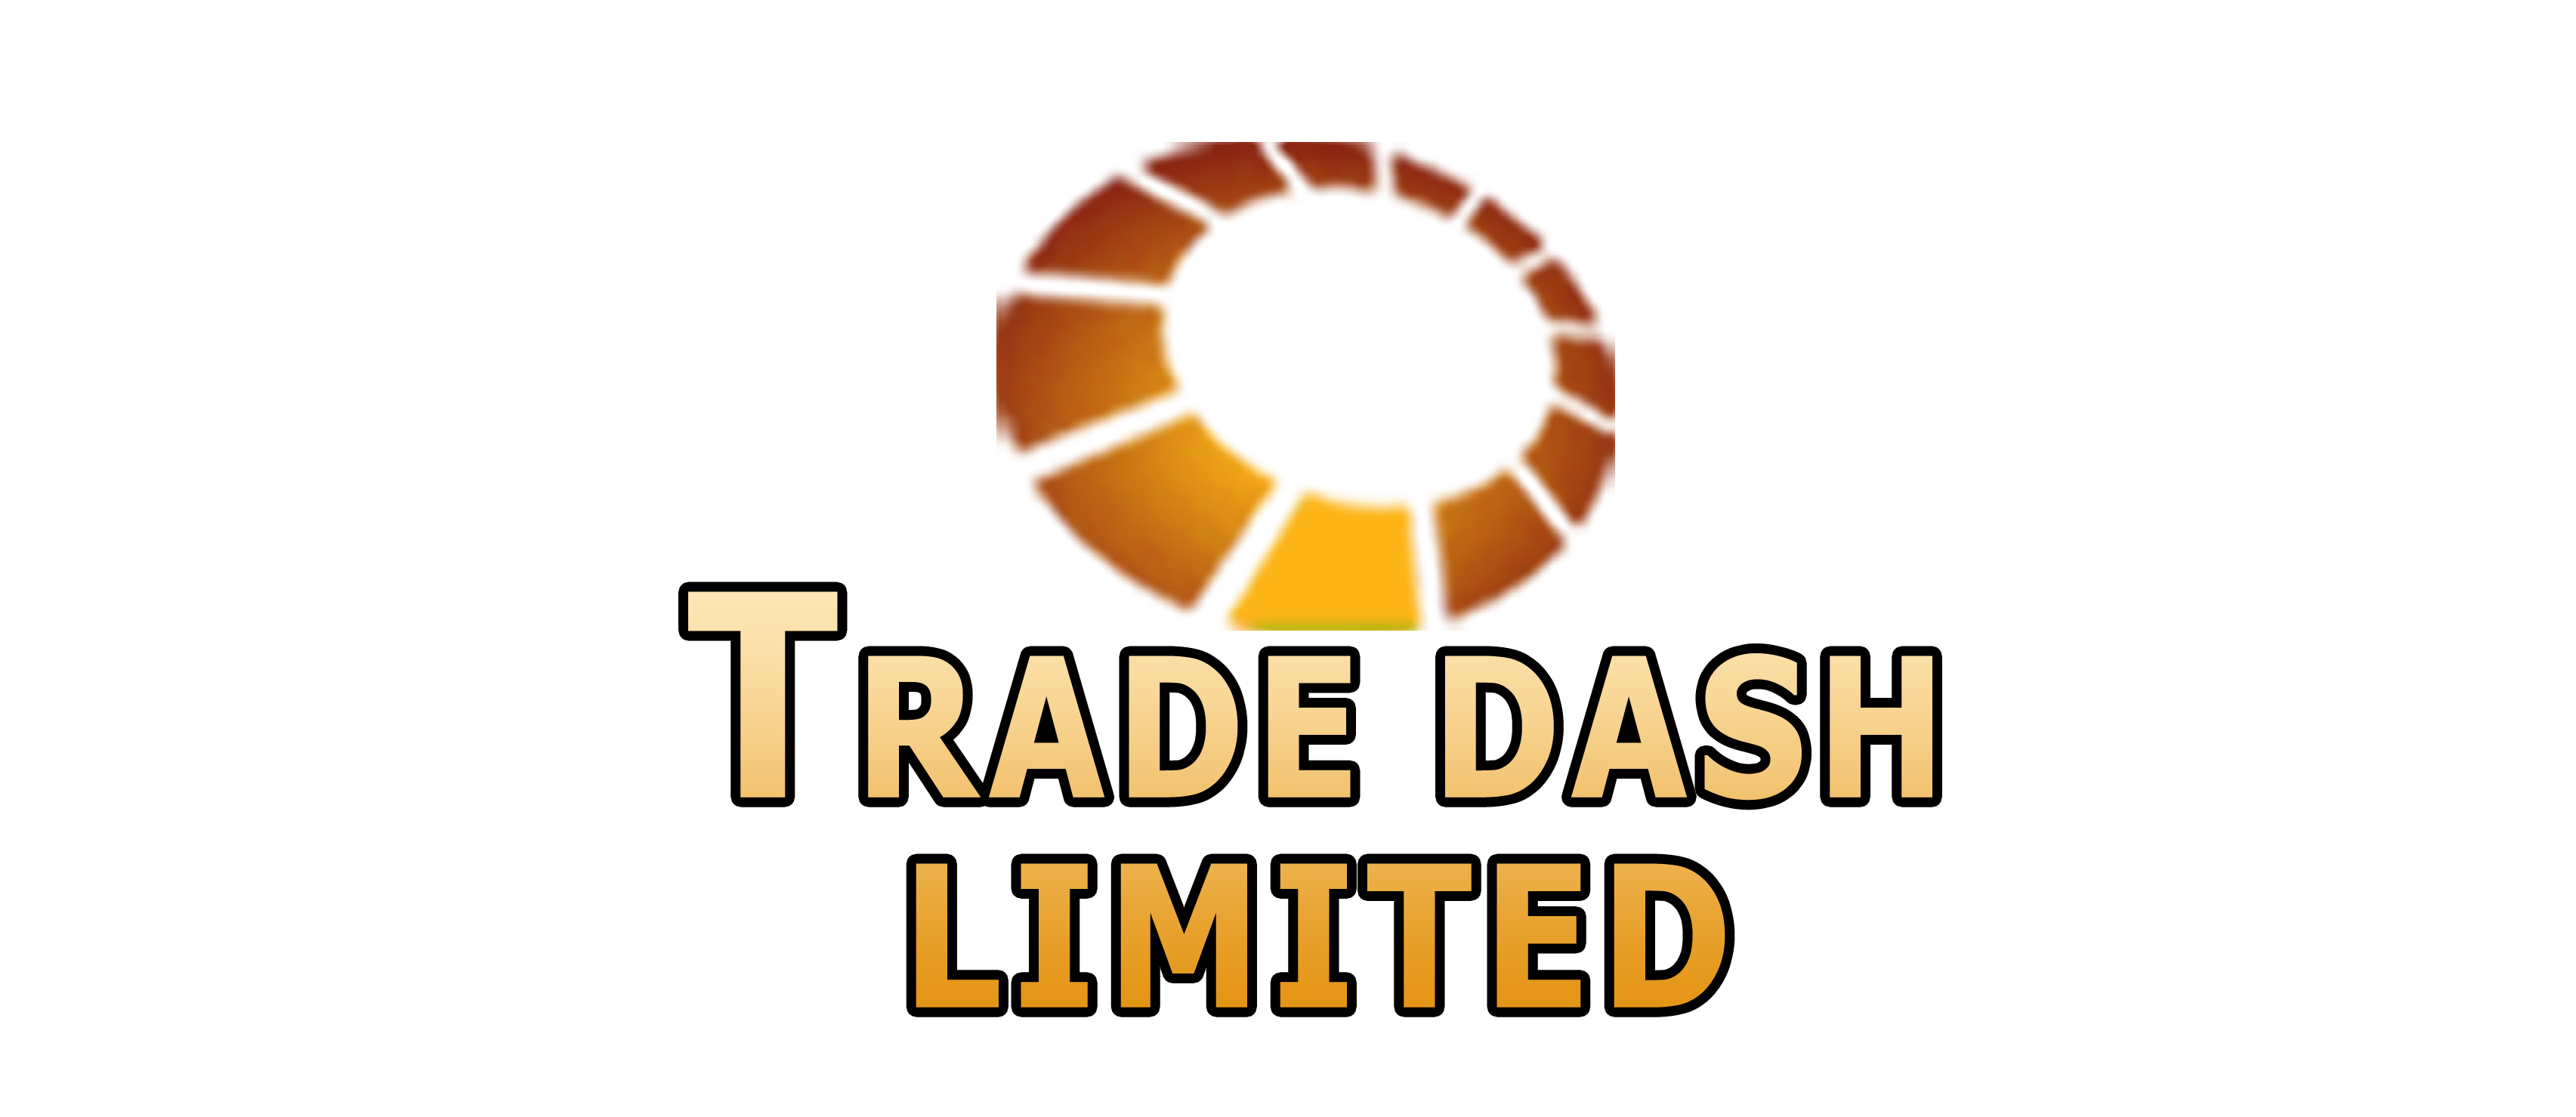  Trade Dash Ltd 